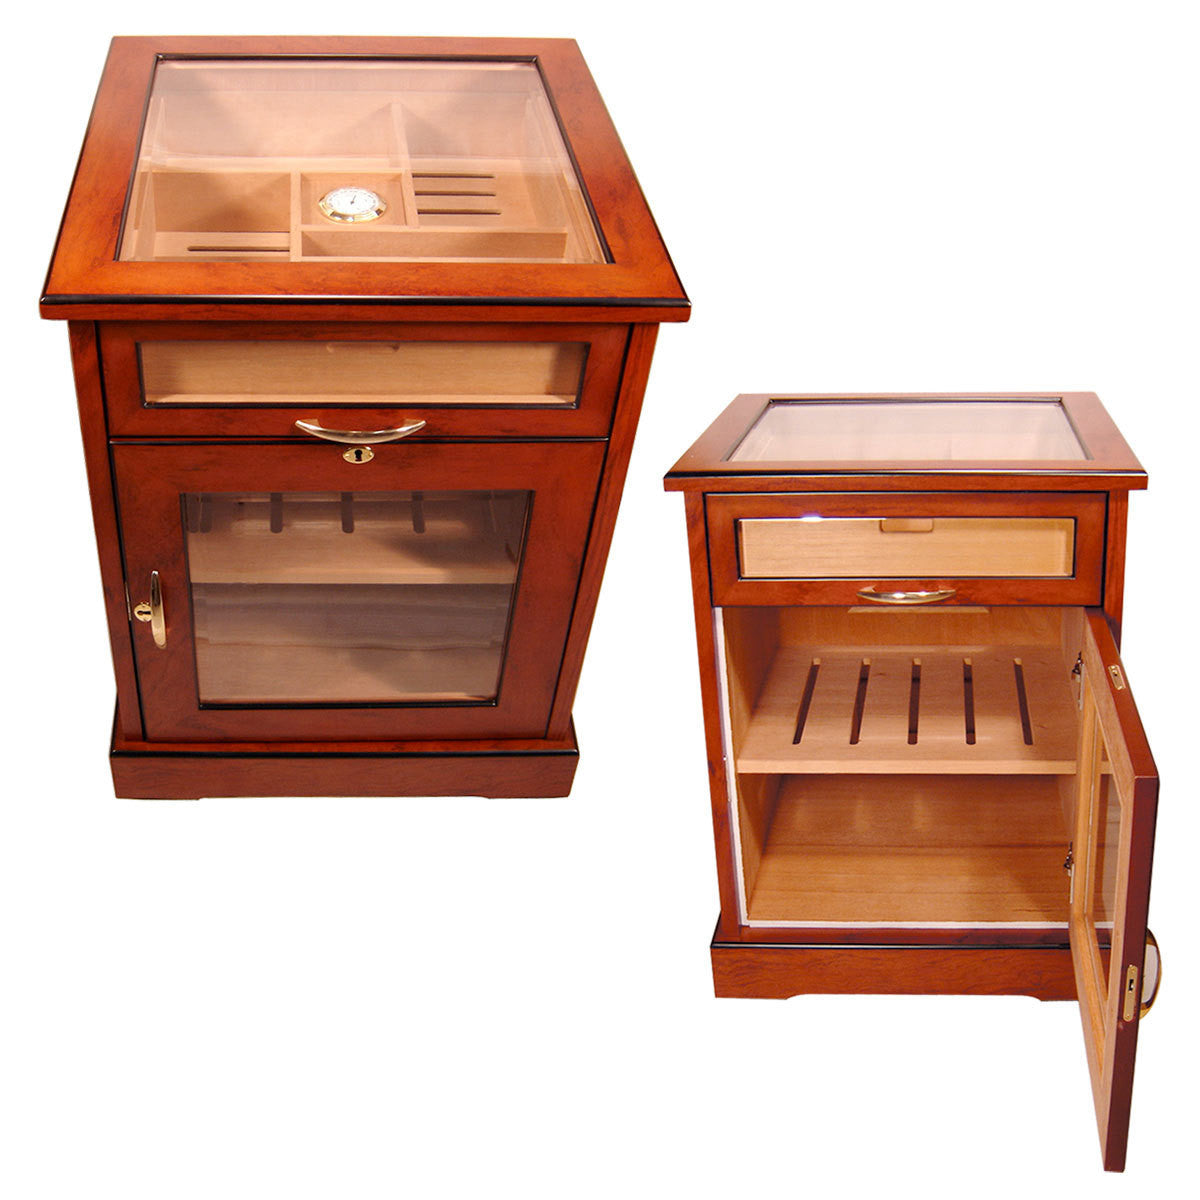 Cuban Crafters Cabinet Humidors End Table Humidor for 600 Cigars Free Shipping - Humidors Wholesaler